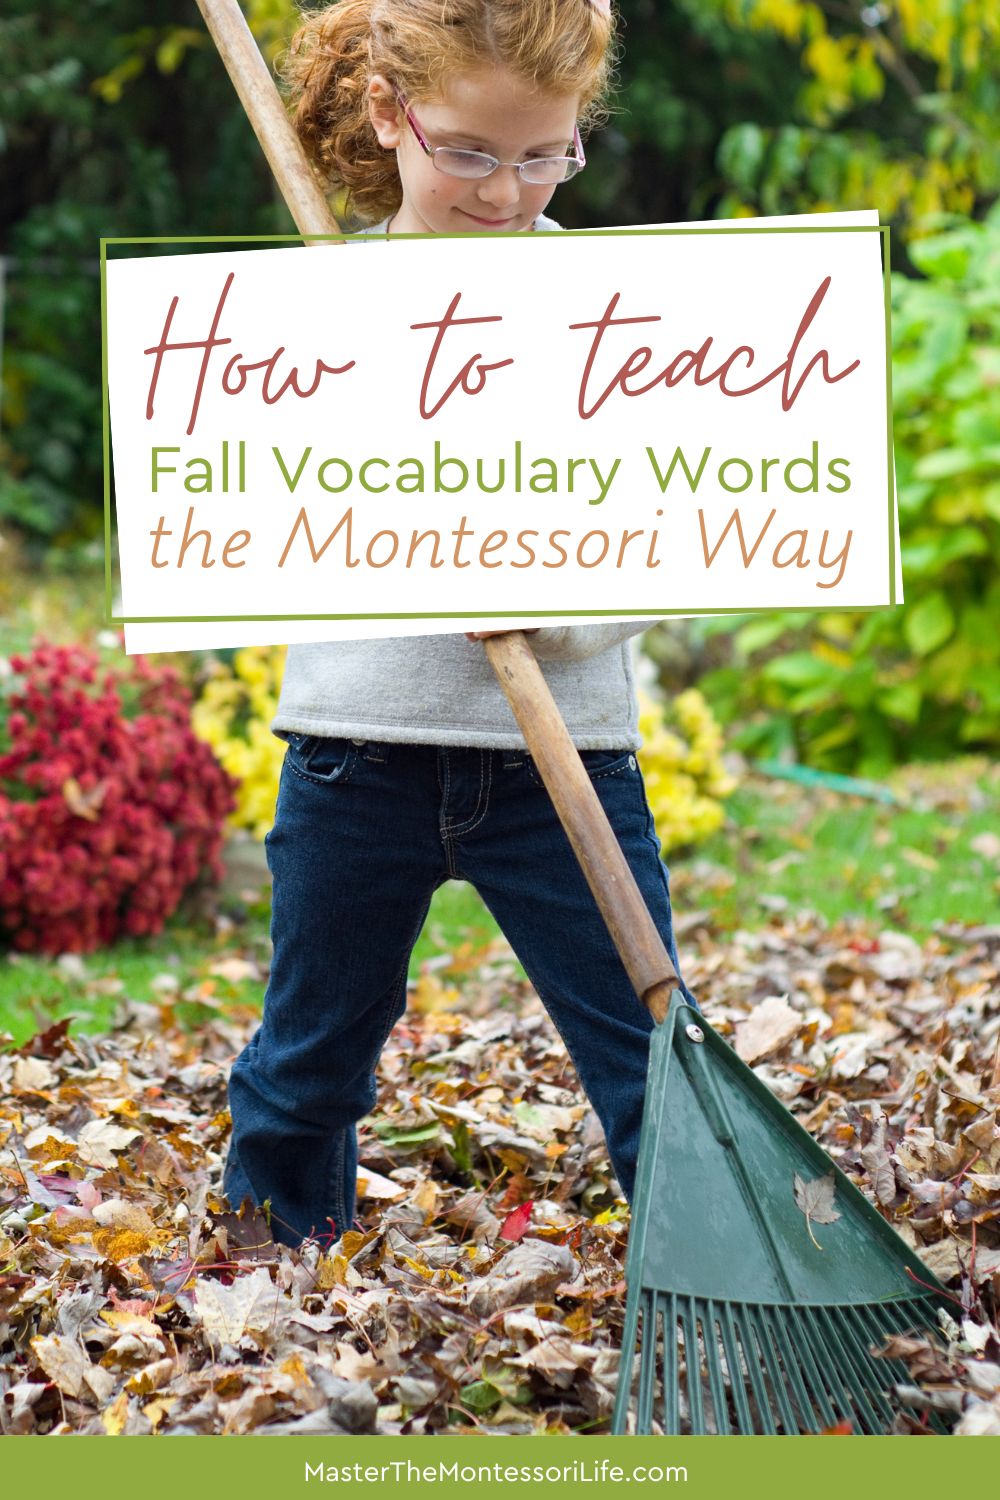 How to teach Fall vocabulary words the Montessori way